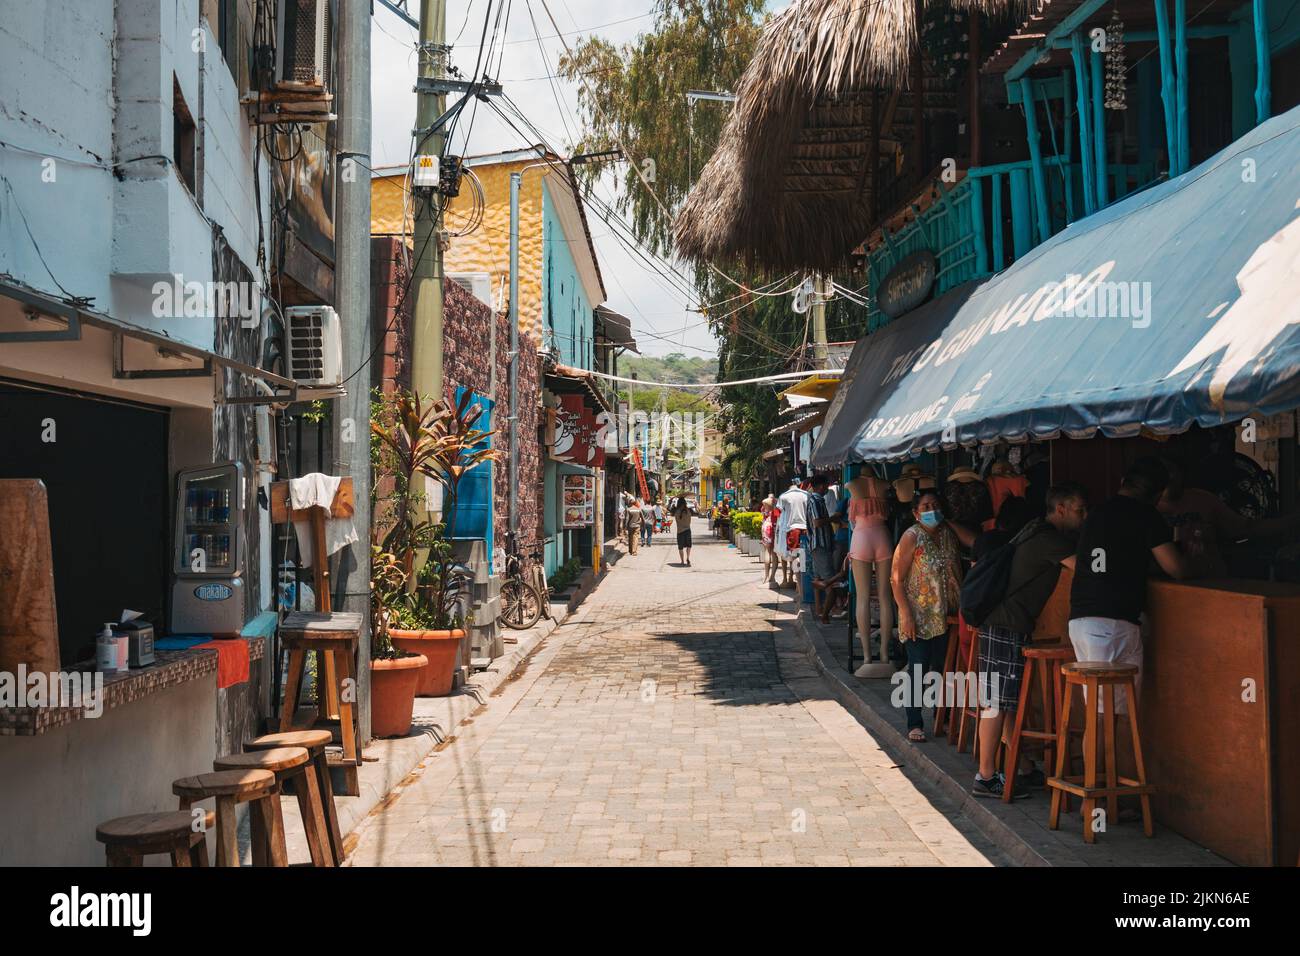 a narrow street with shops, restaurants and bars in El Tunco, El Salvador Stock Photo